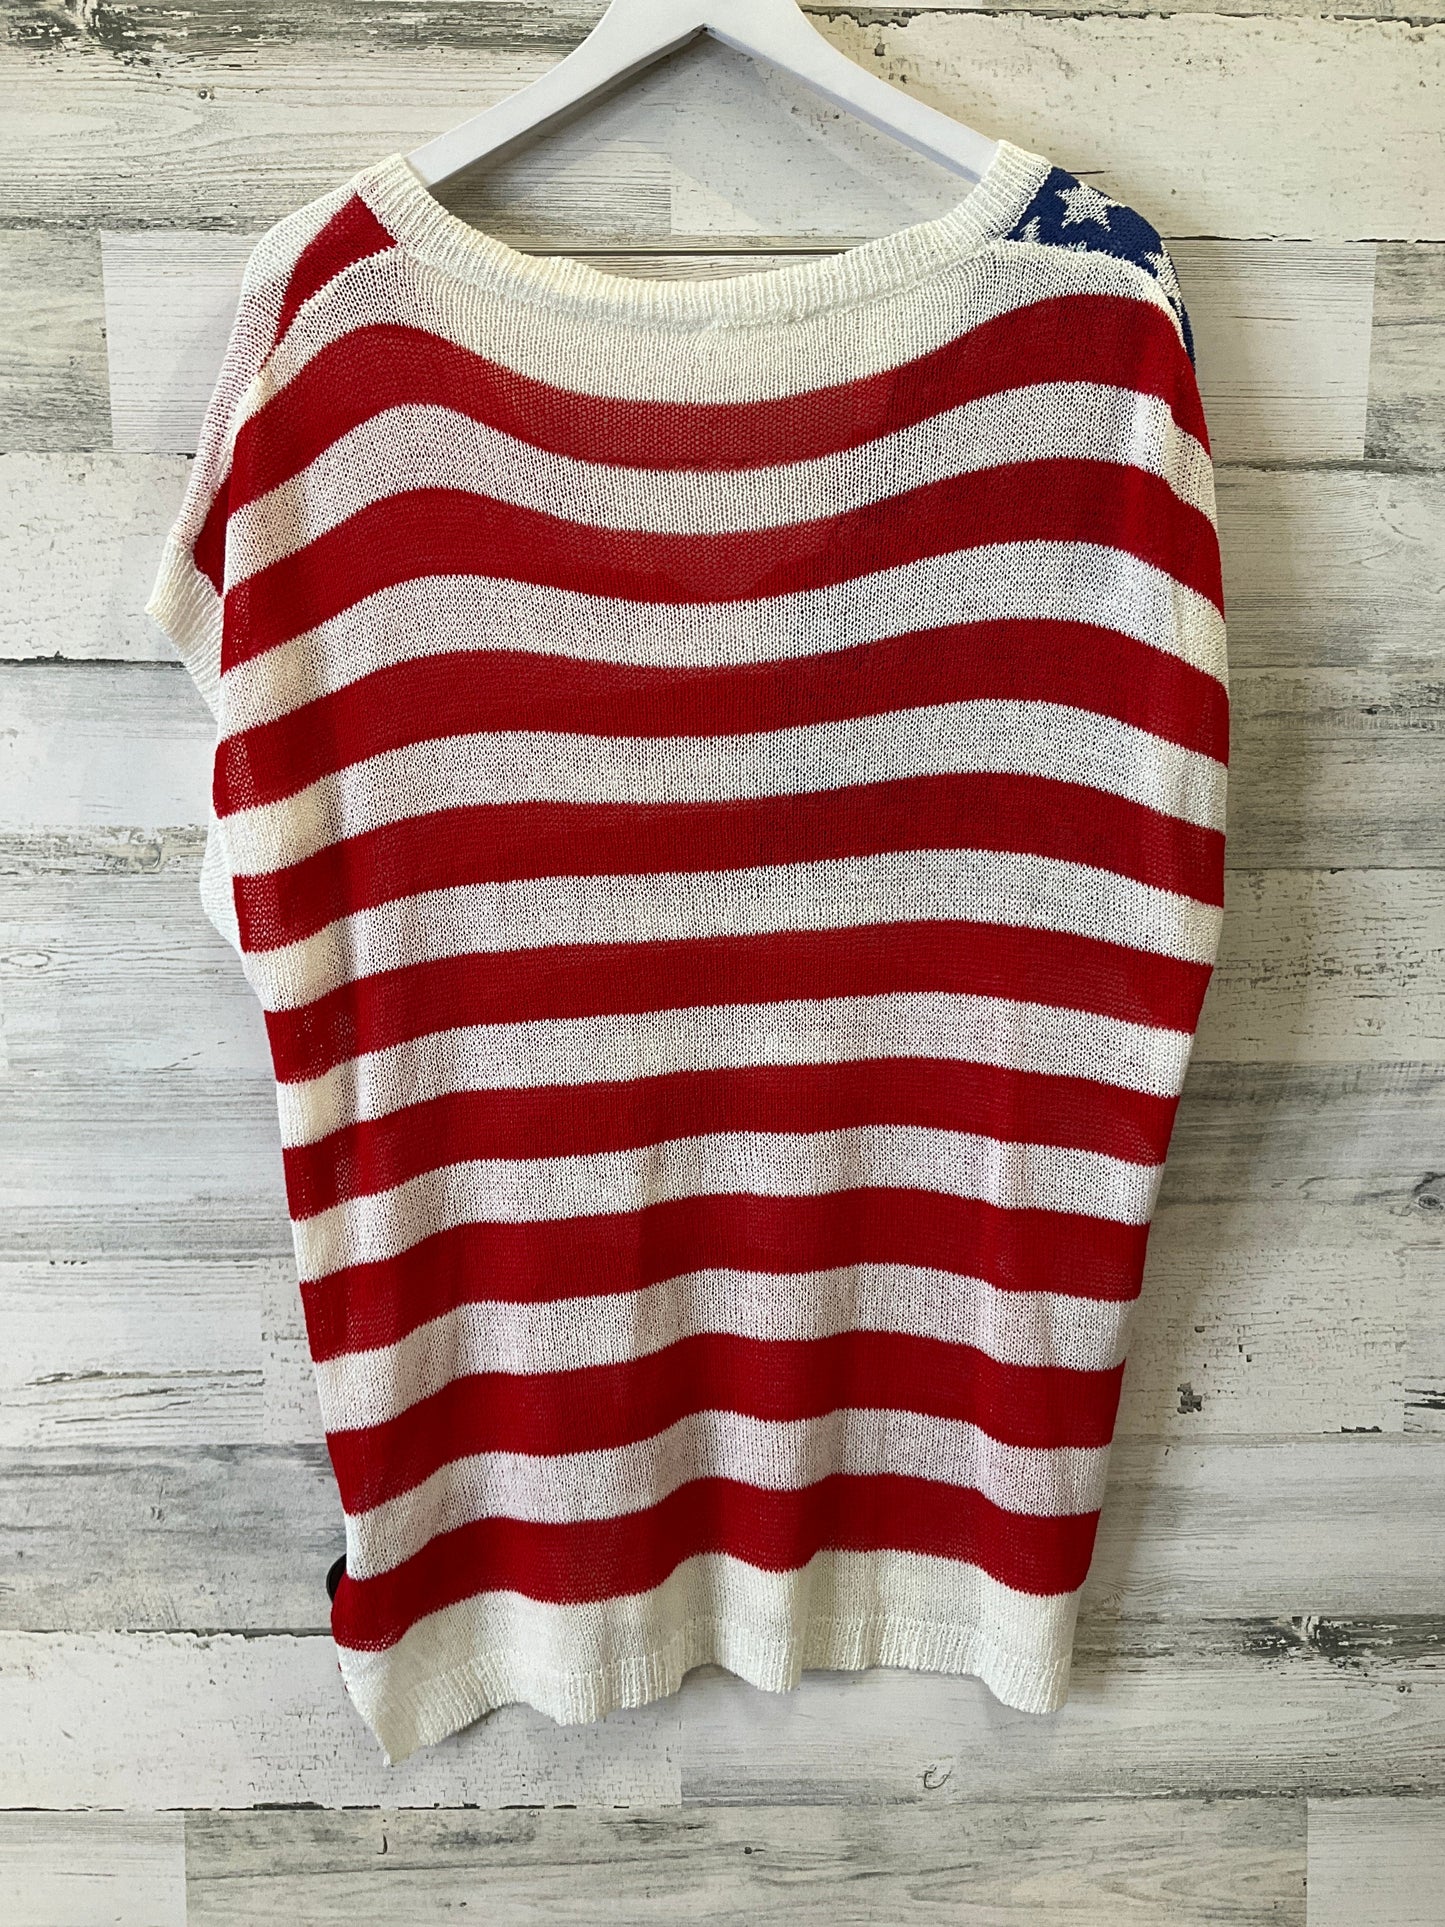 Blue & Red & White Sweater Short Sleeve Bibi, Size Xl